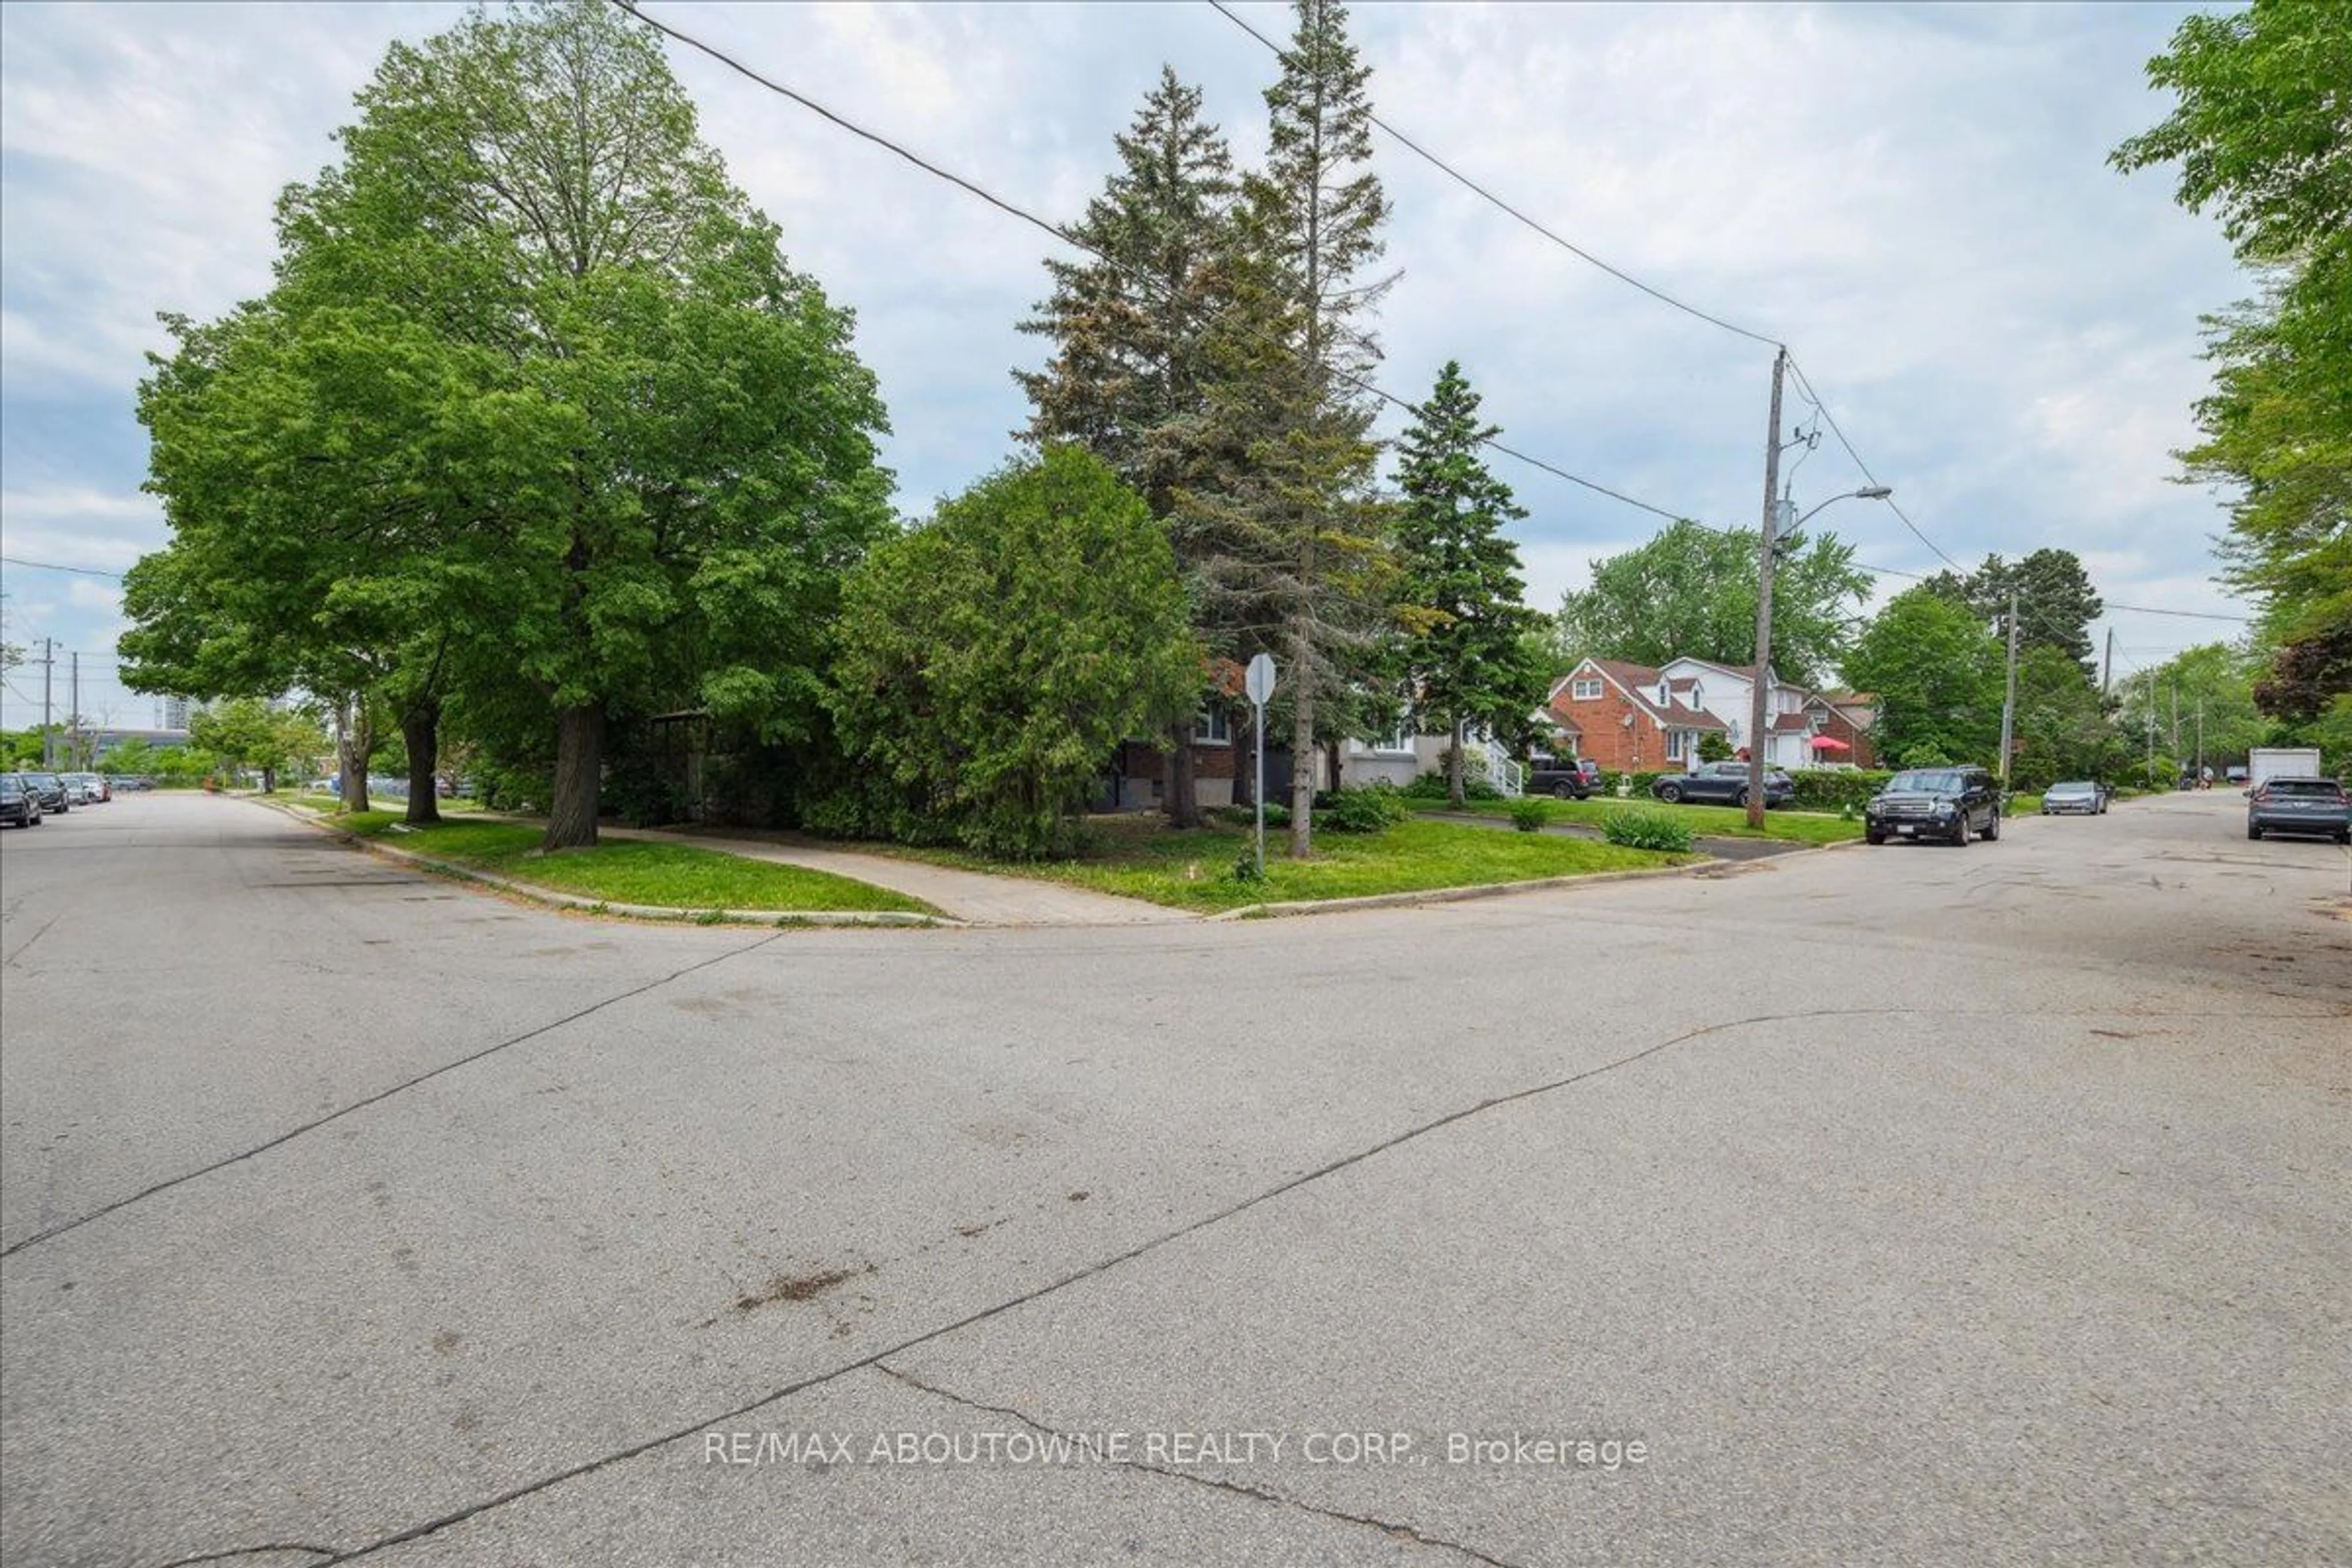 Street view for 59 Dromore Cres, Toronto Ontario M2R 2H4